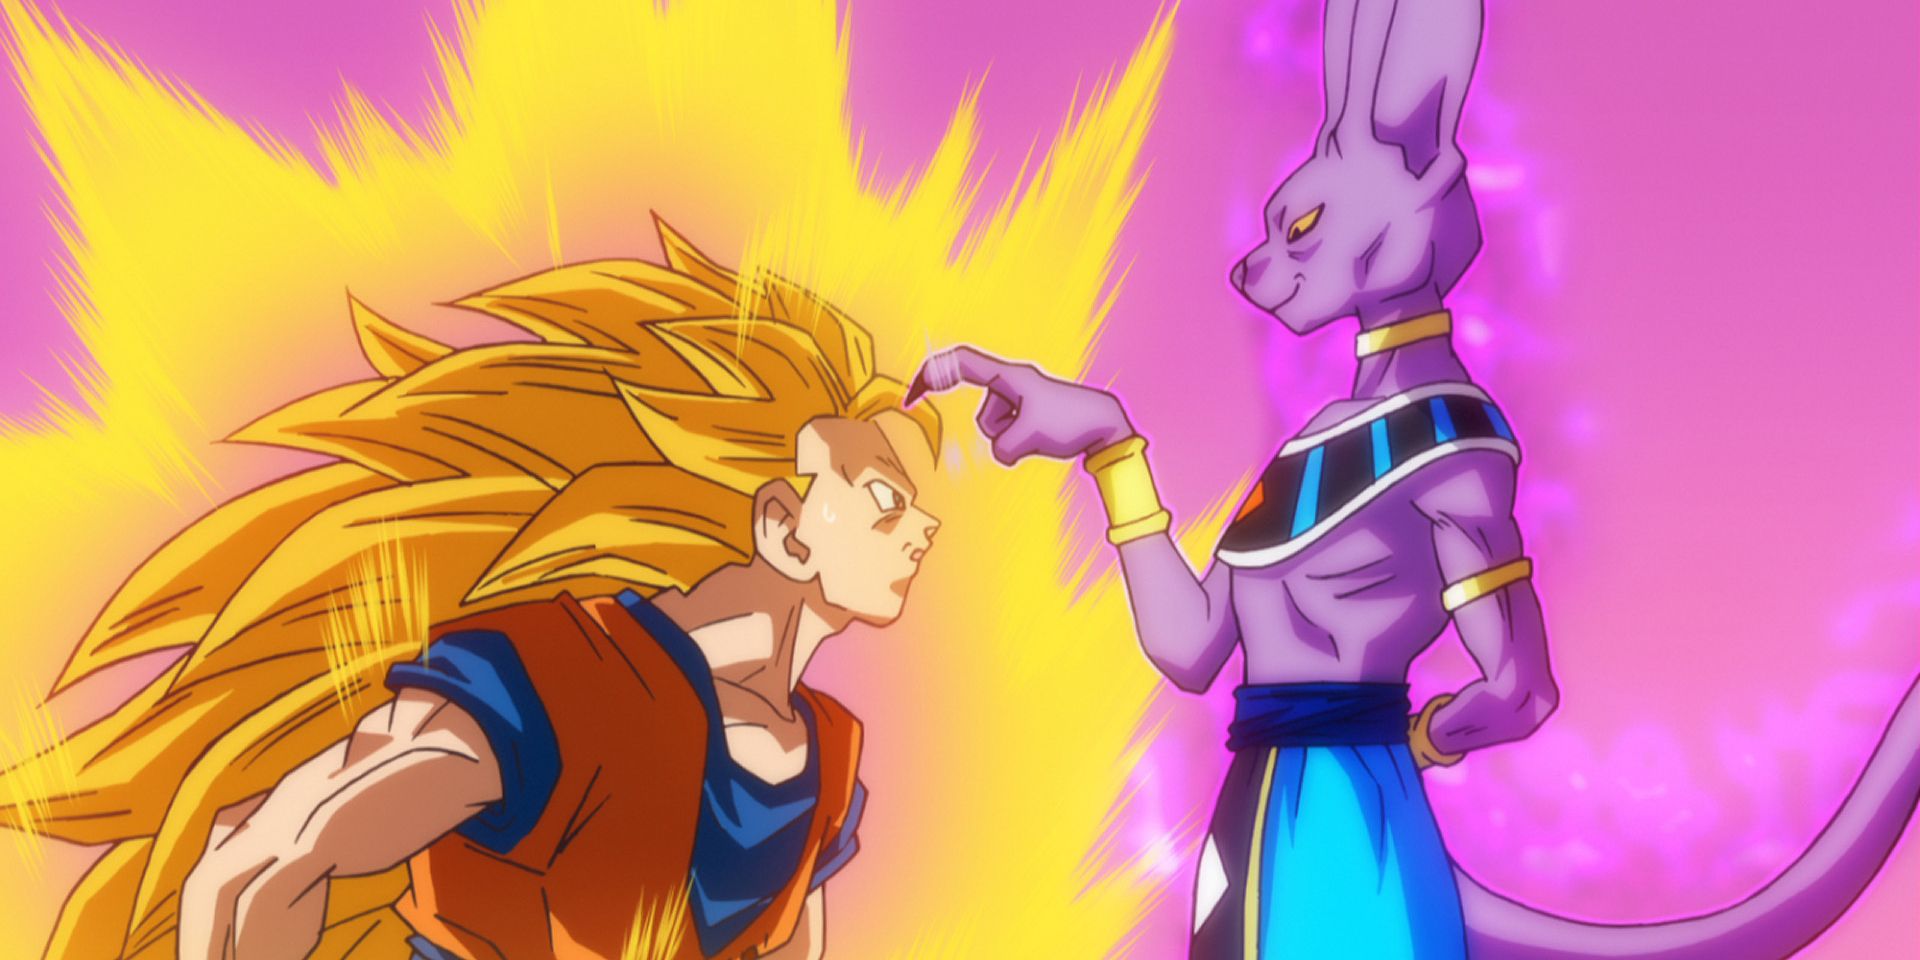 Beerus, the God of Destruction, effortlessly defeats Goku's Super Saiyan 3 form during the preliminary arc of Dragon Ball Super